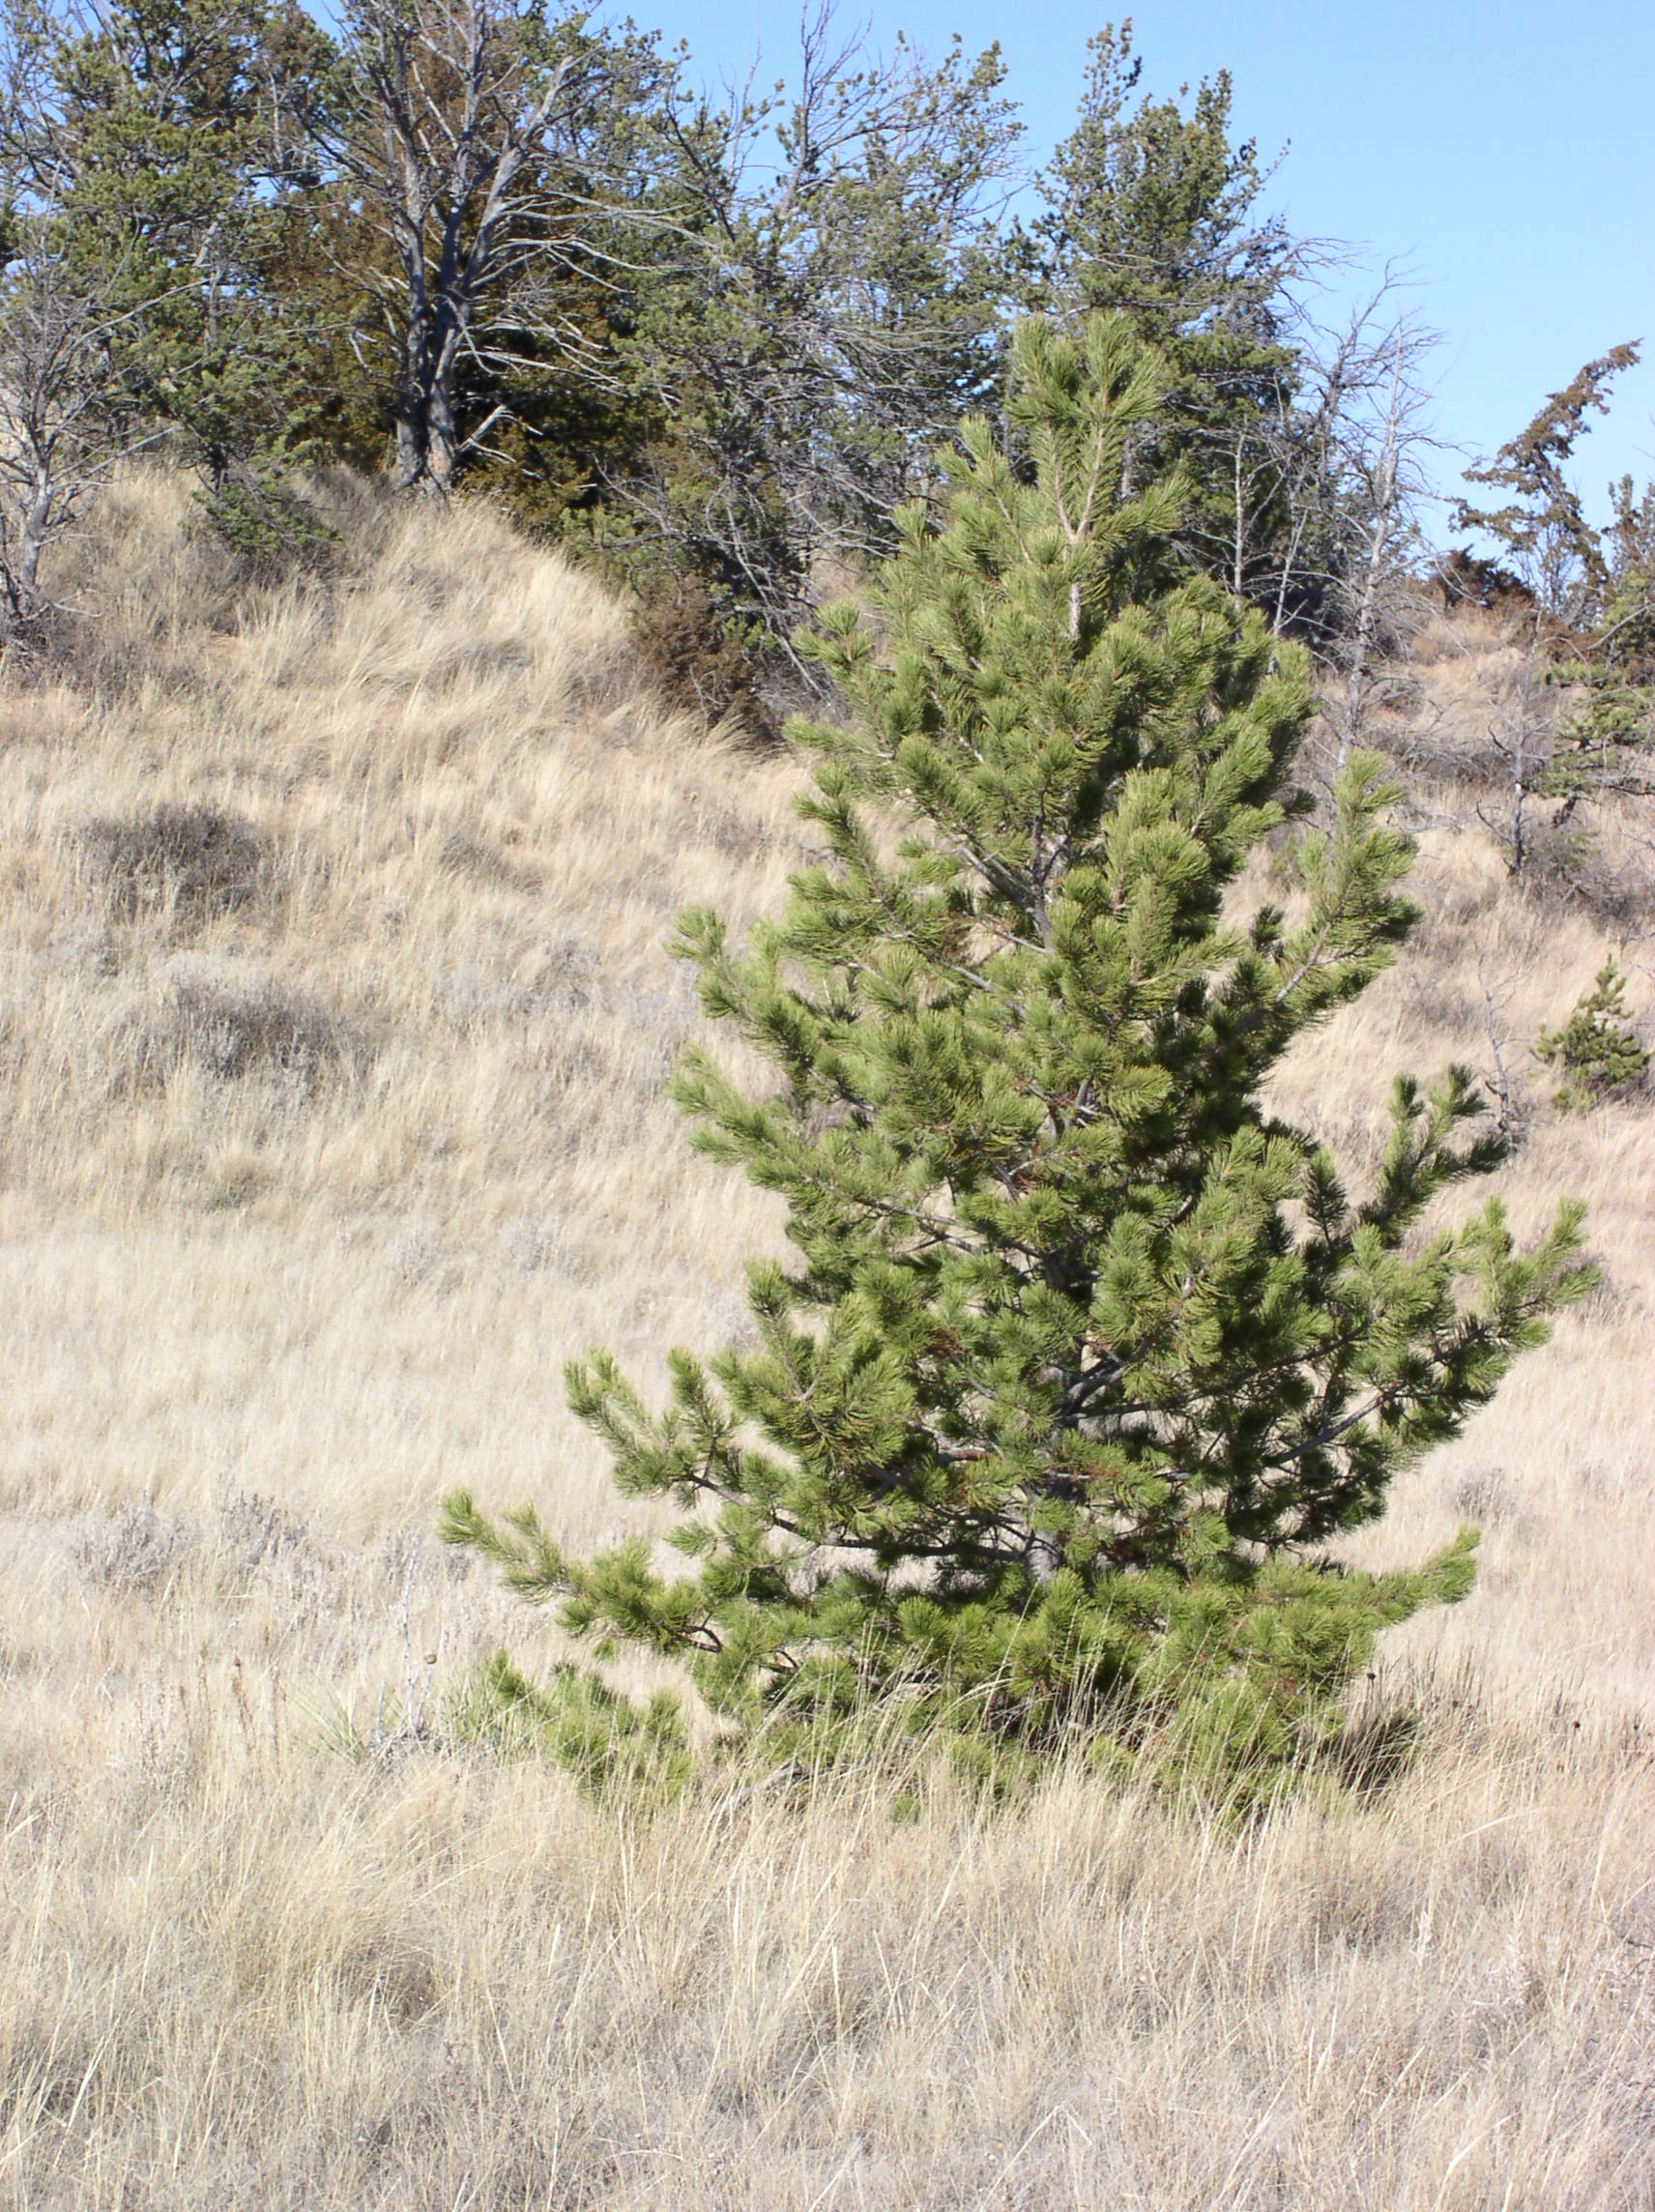 This lone limber pine tree is in North Dakota's Slope County. (NDSU photo)